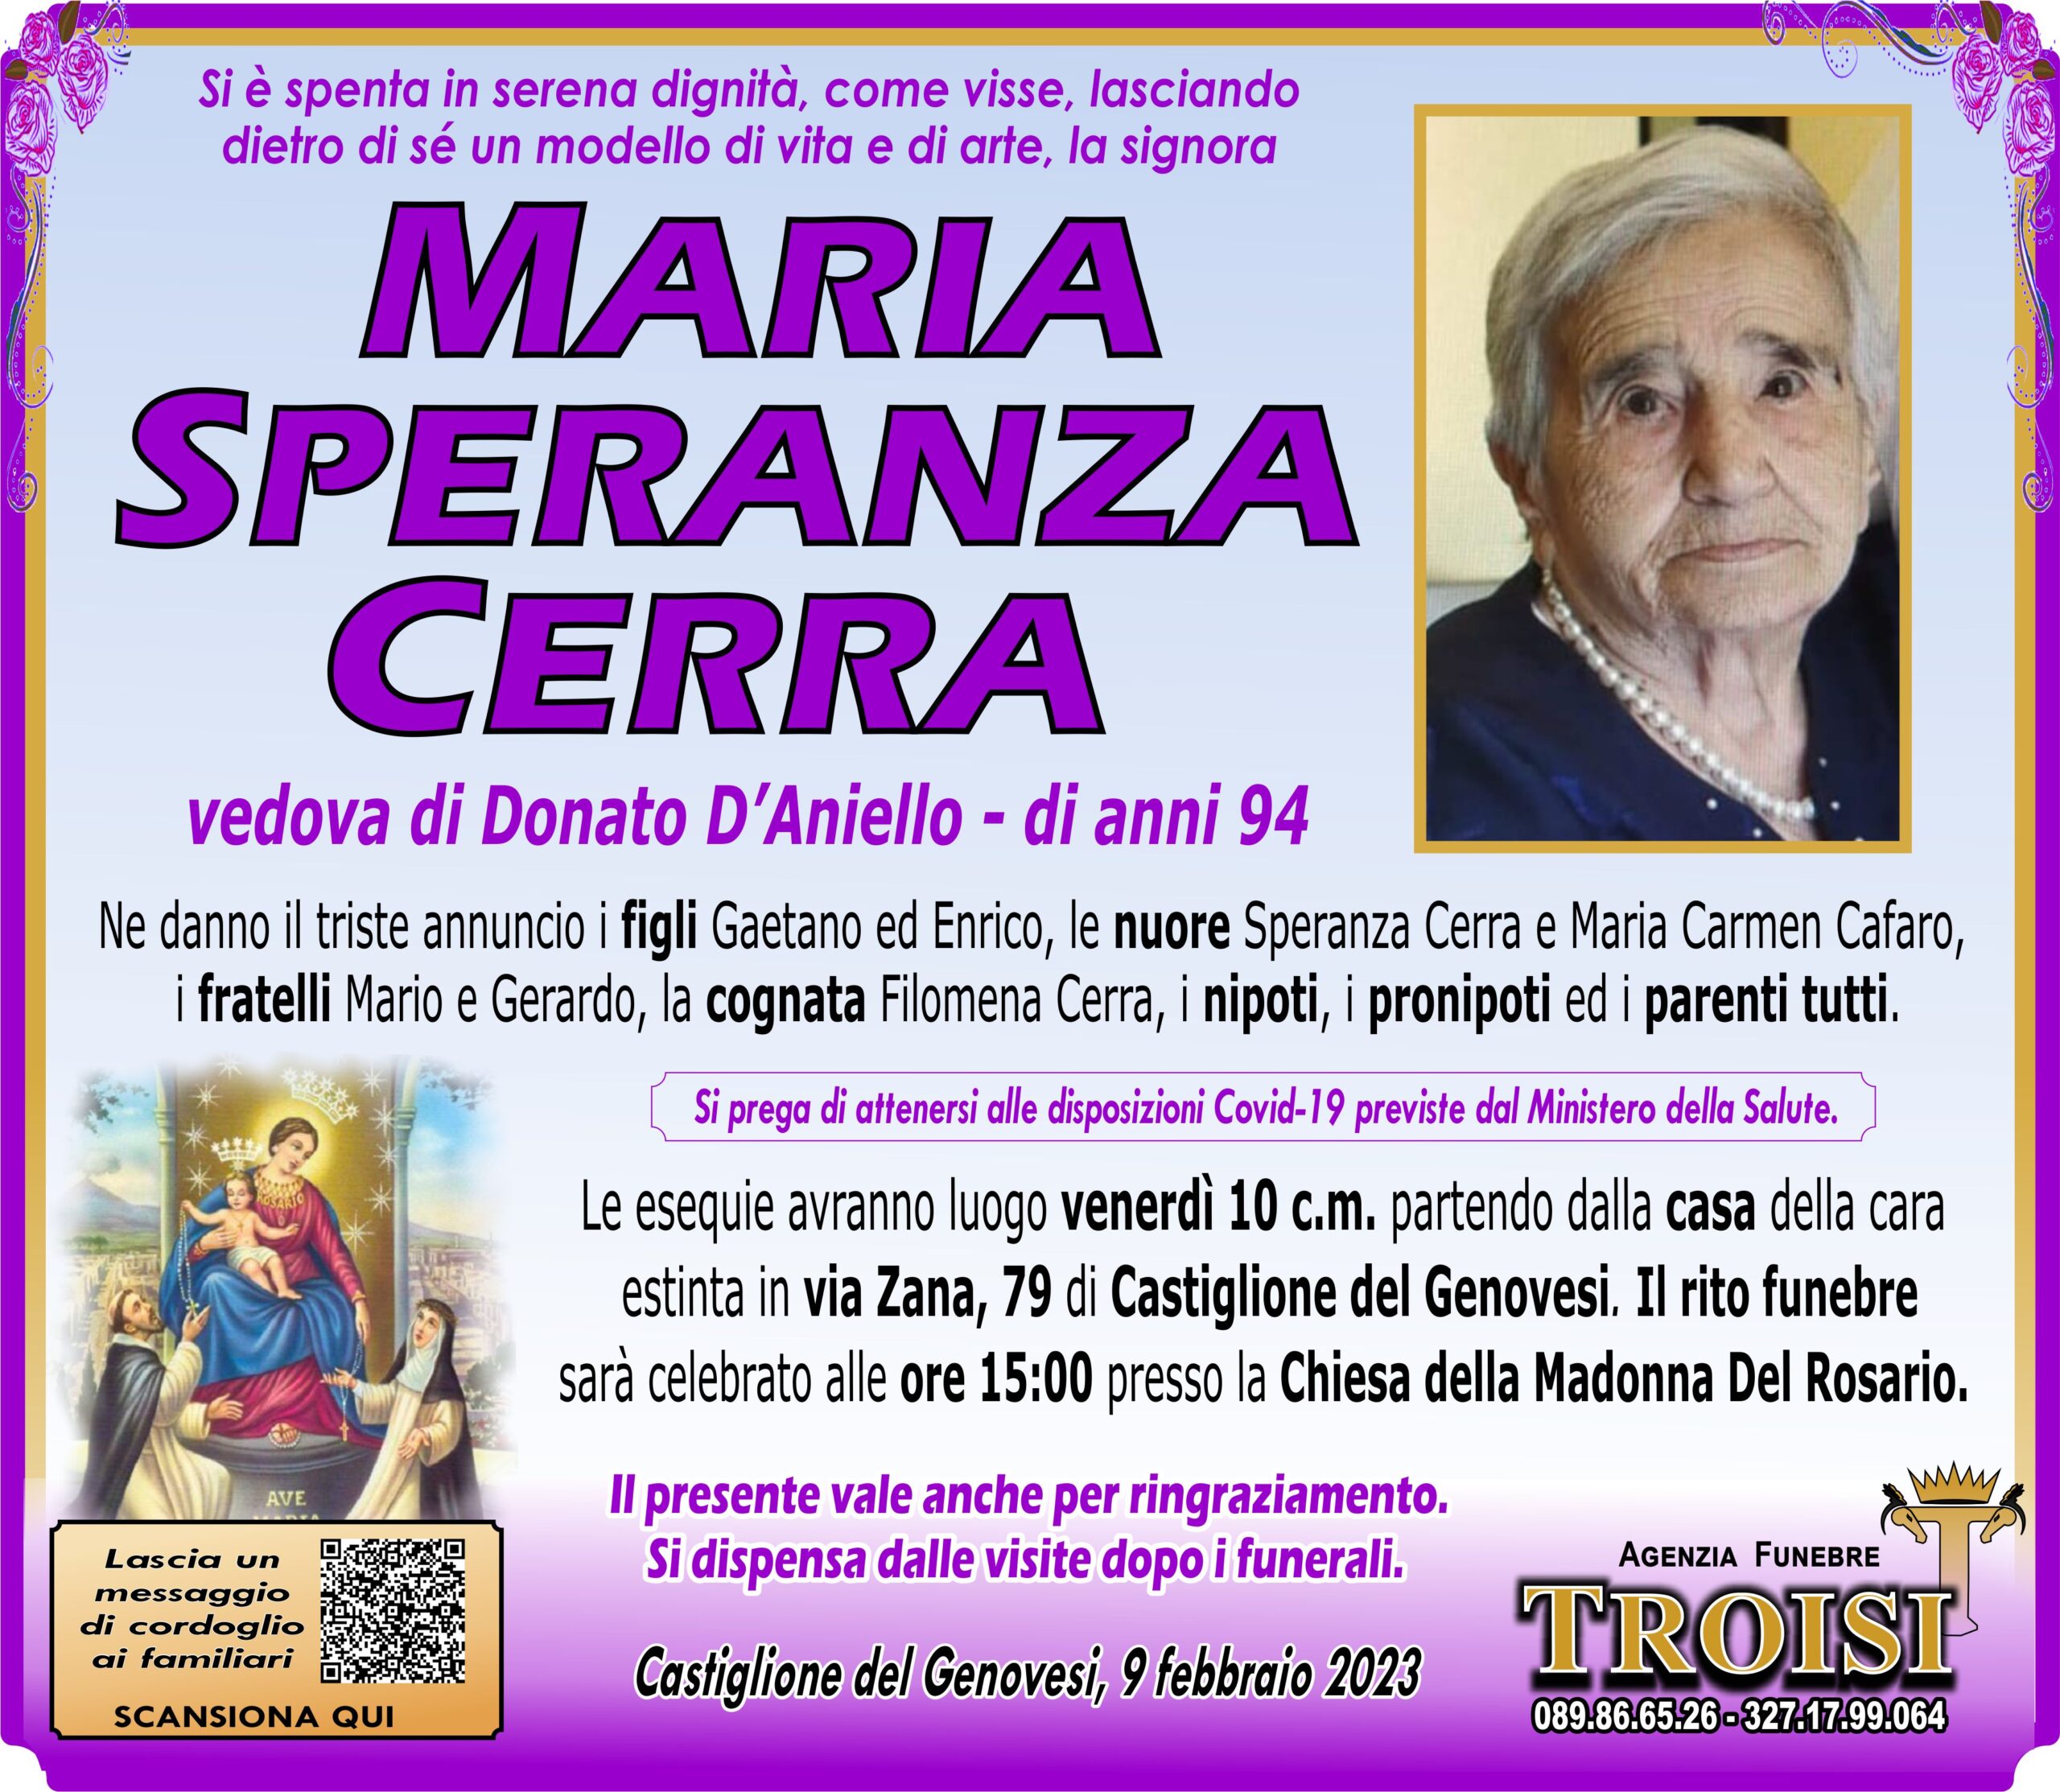 MARIA SPERANZA CERRA